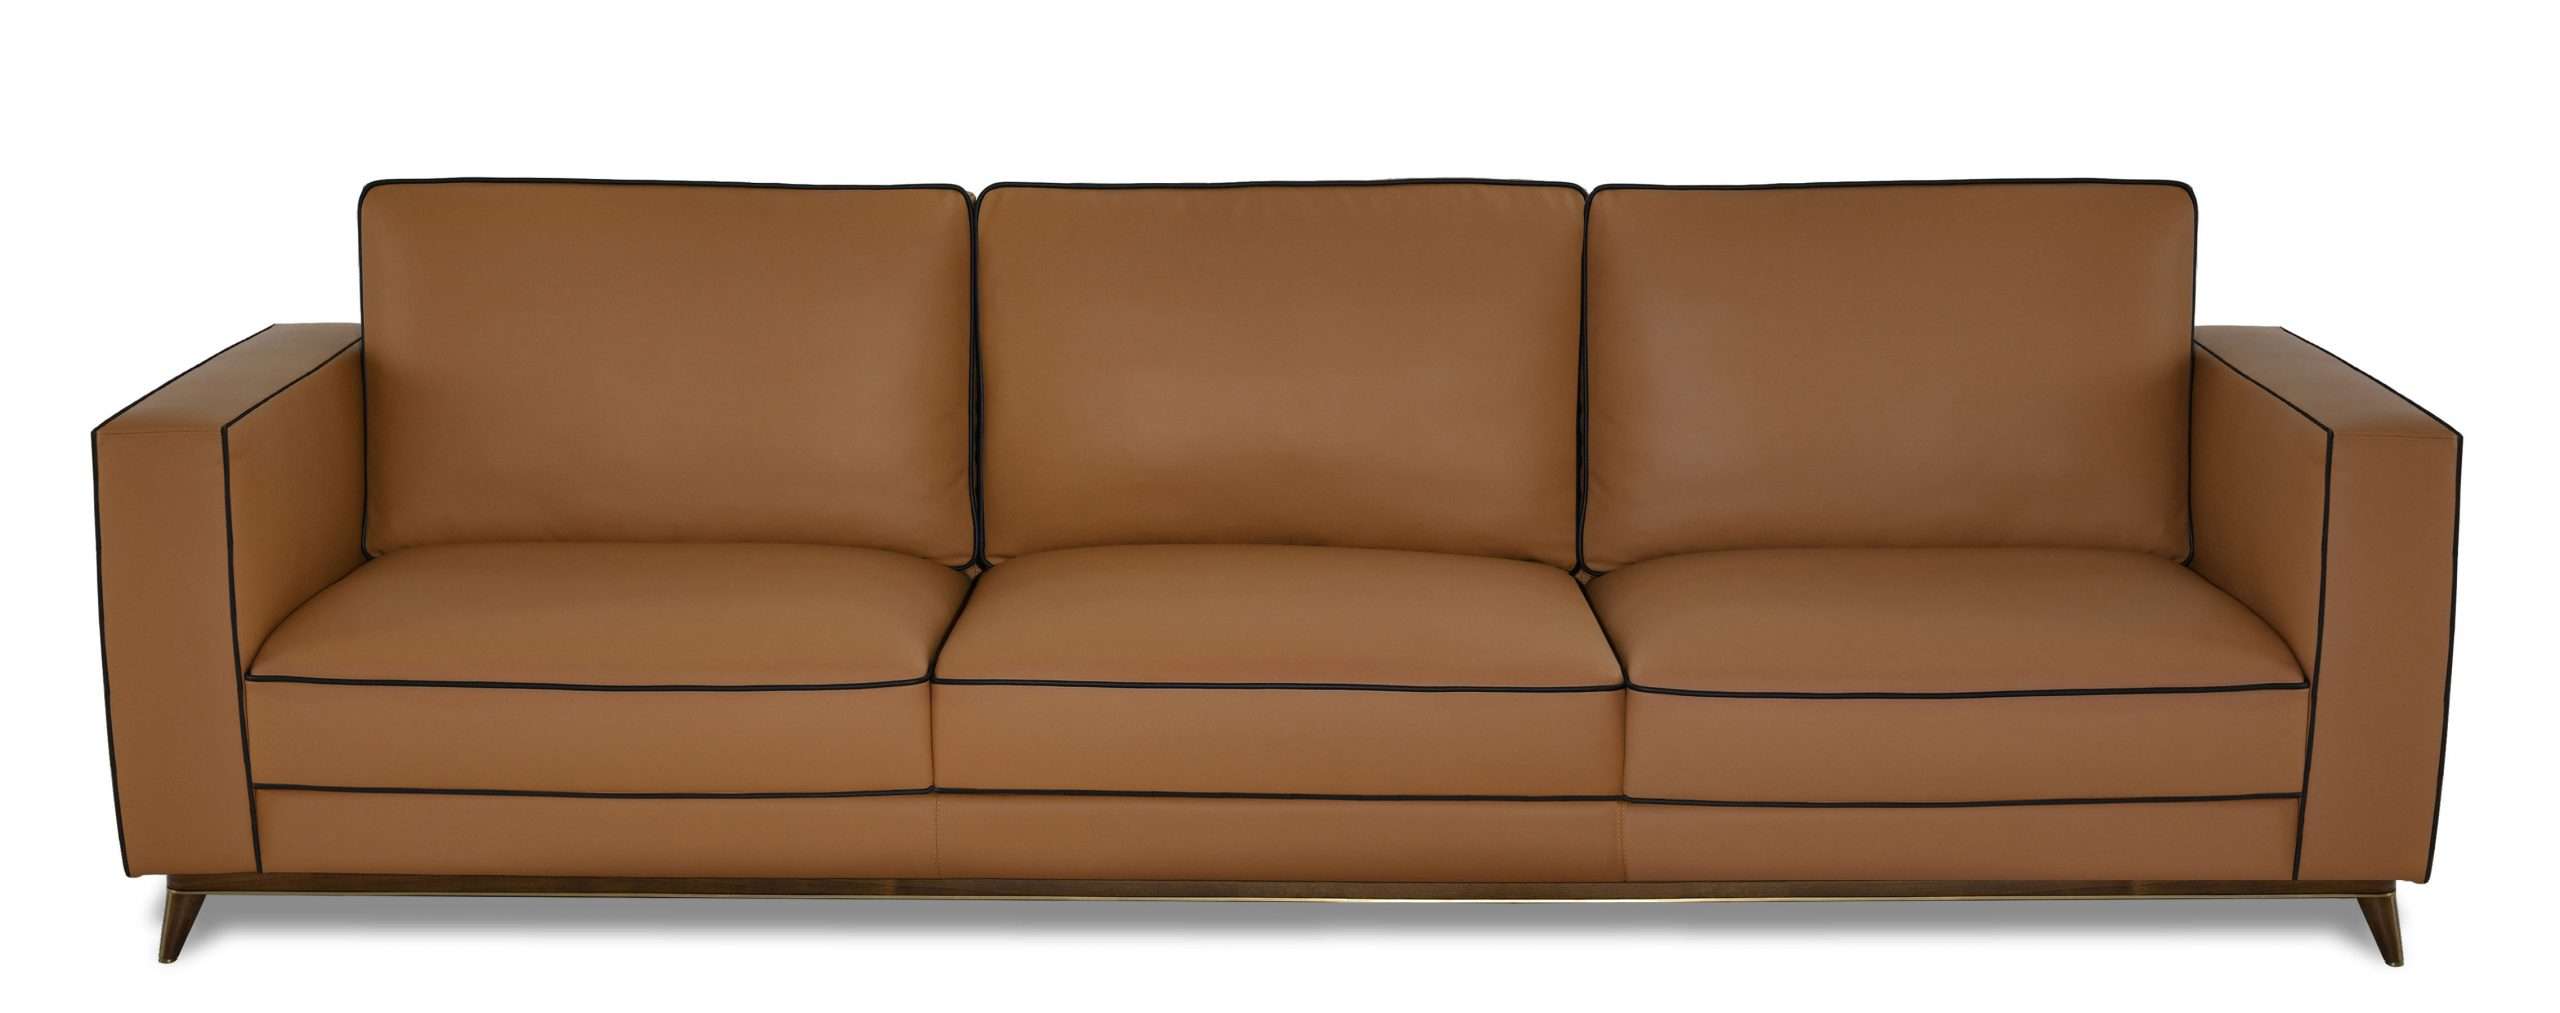 KOEN 3-Seater Sofa